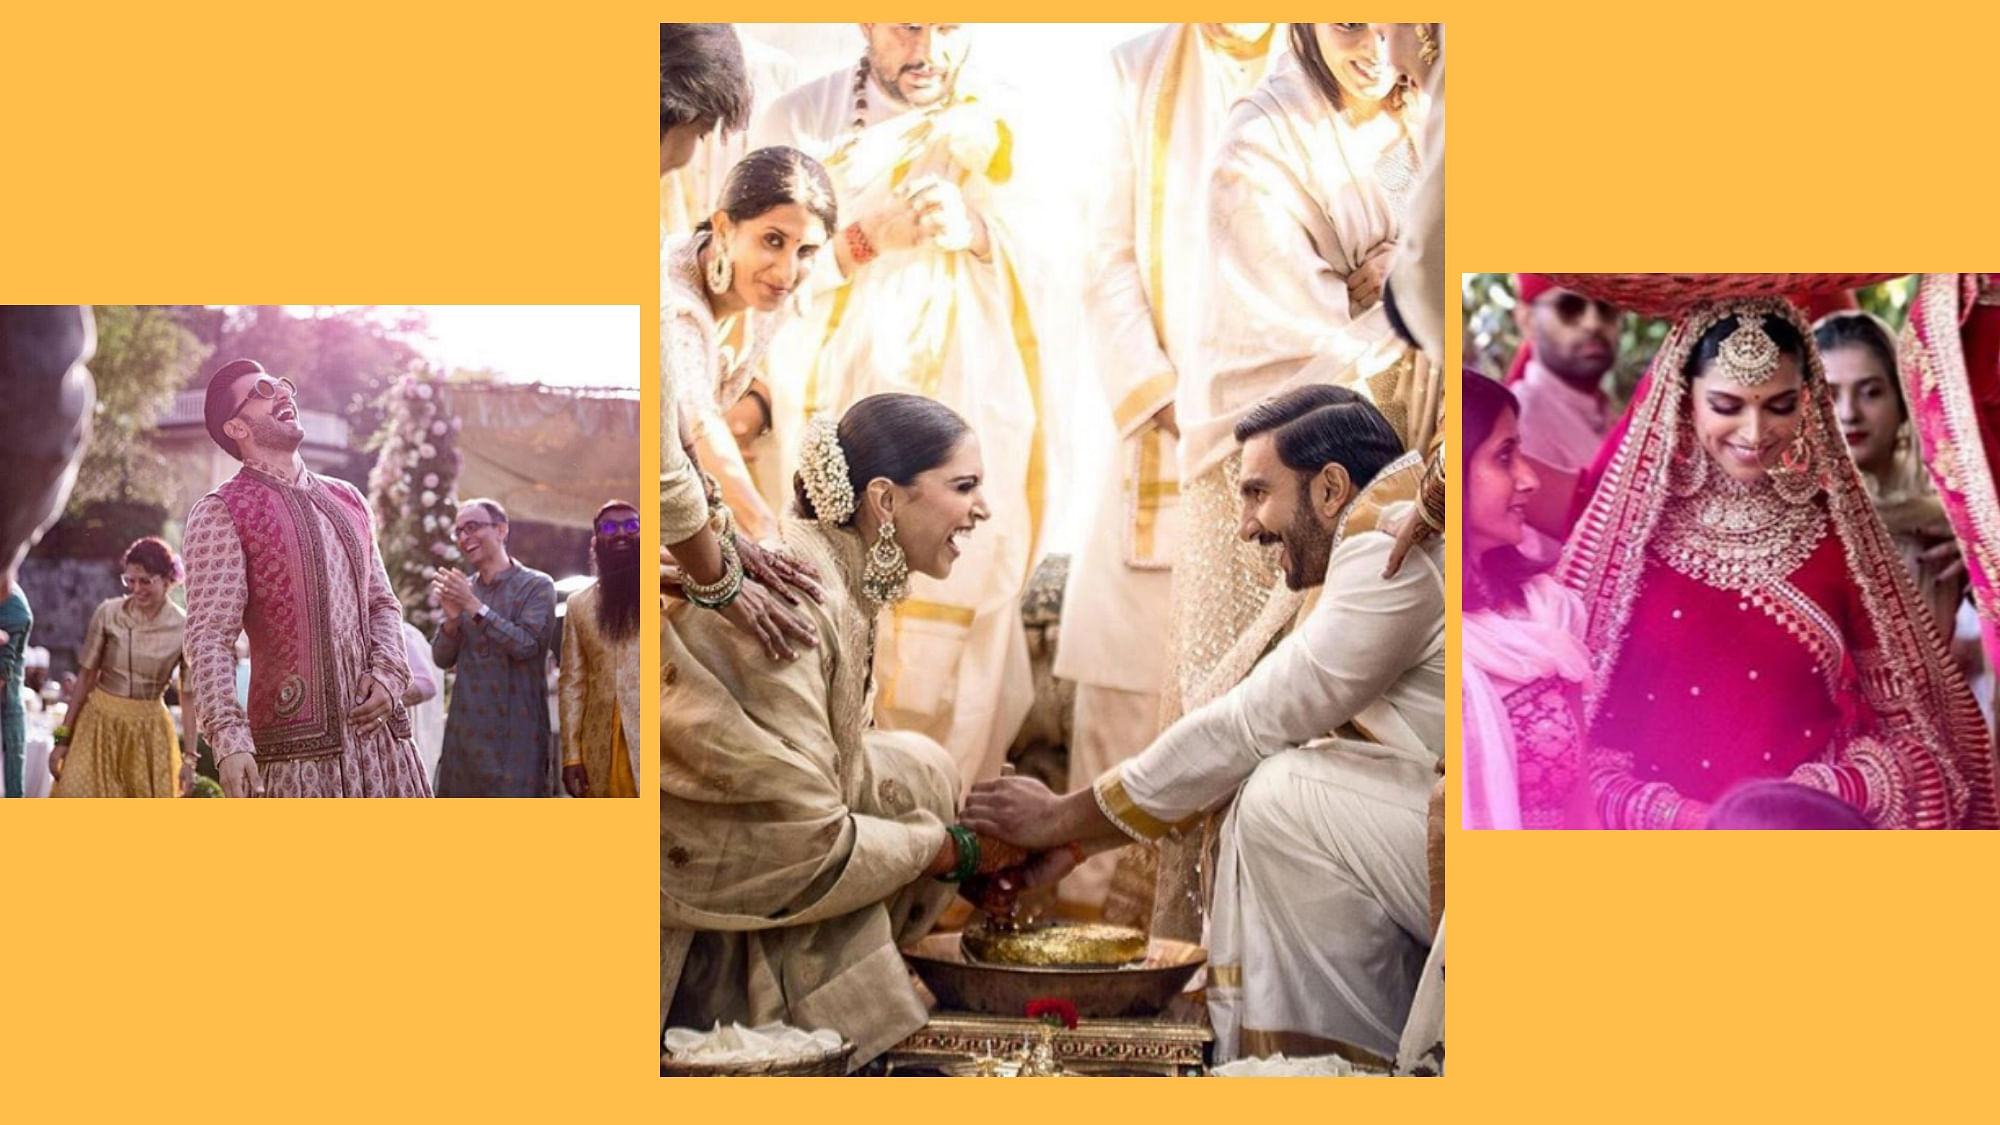  The Ranveer Singh and Deepika Padukone nuptials are wedding goals.